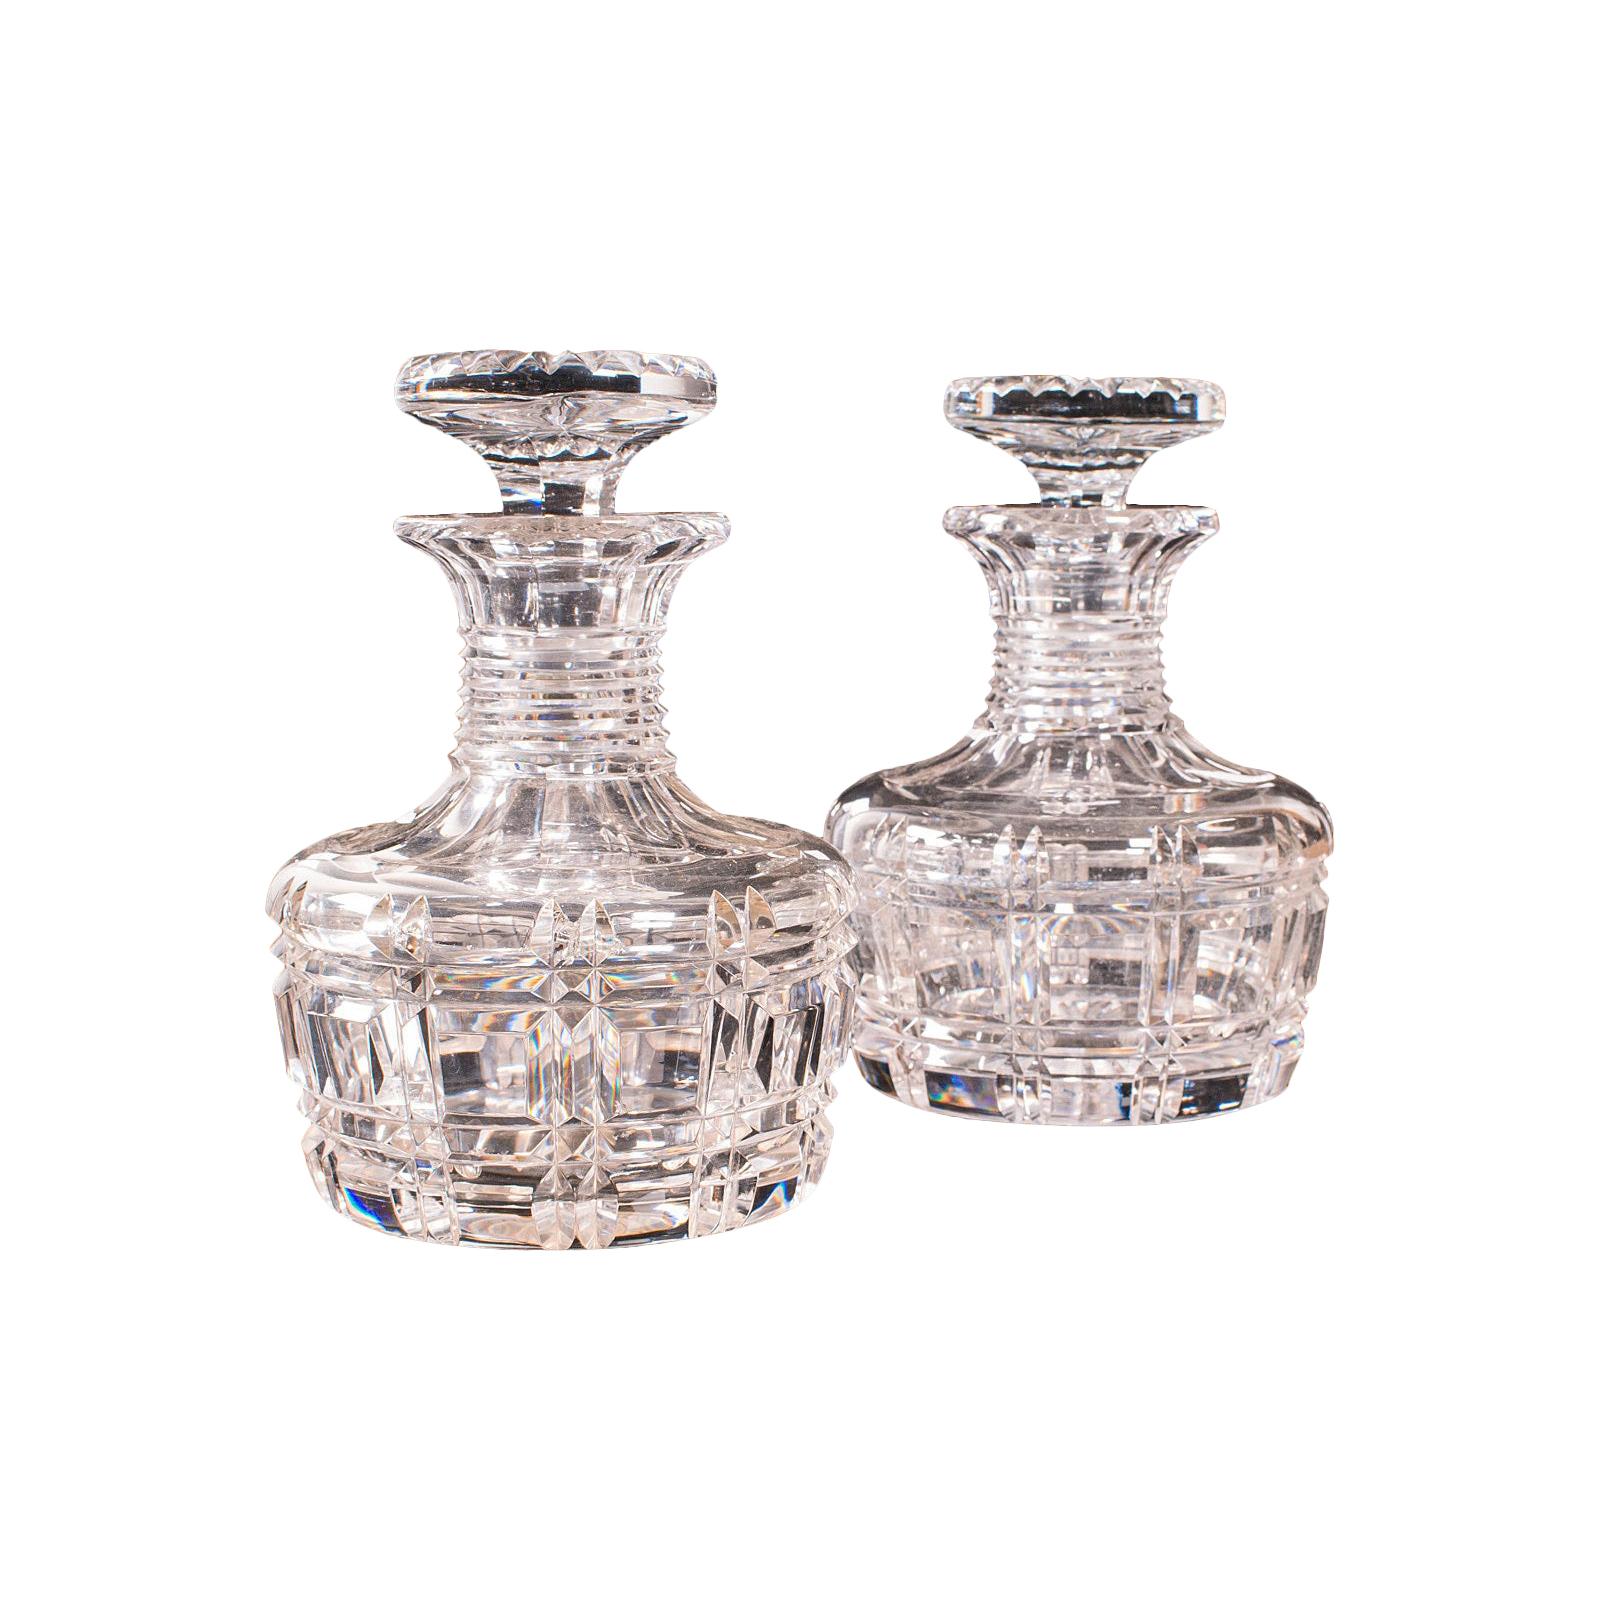 https://a.1stdibscdn.com/pair-antique-sherry-decanters-english-glass-spirit-liquor-flask-edwardian-for-sale/1121189/f_239496721622271753435/23949672_master.jpg